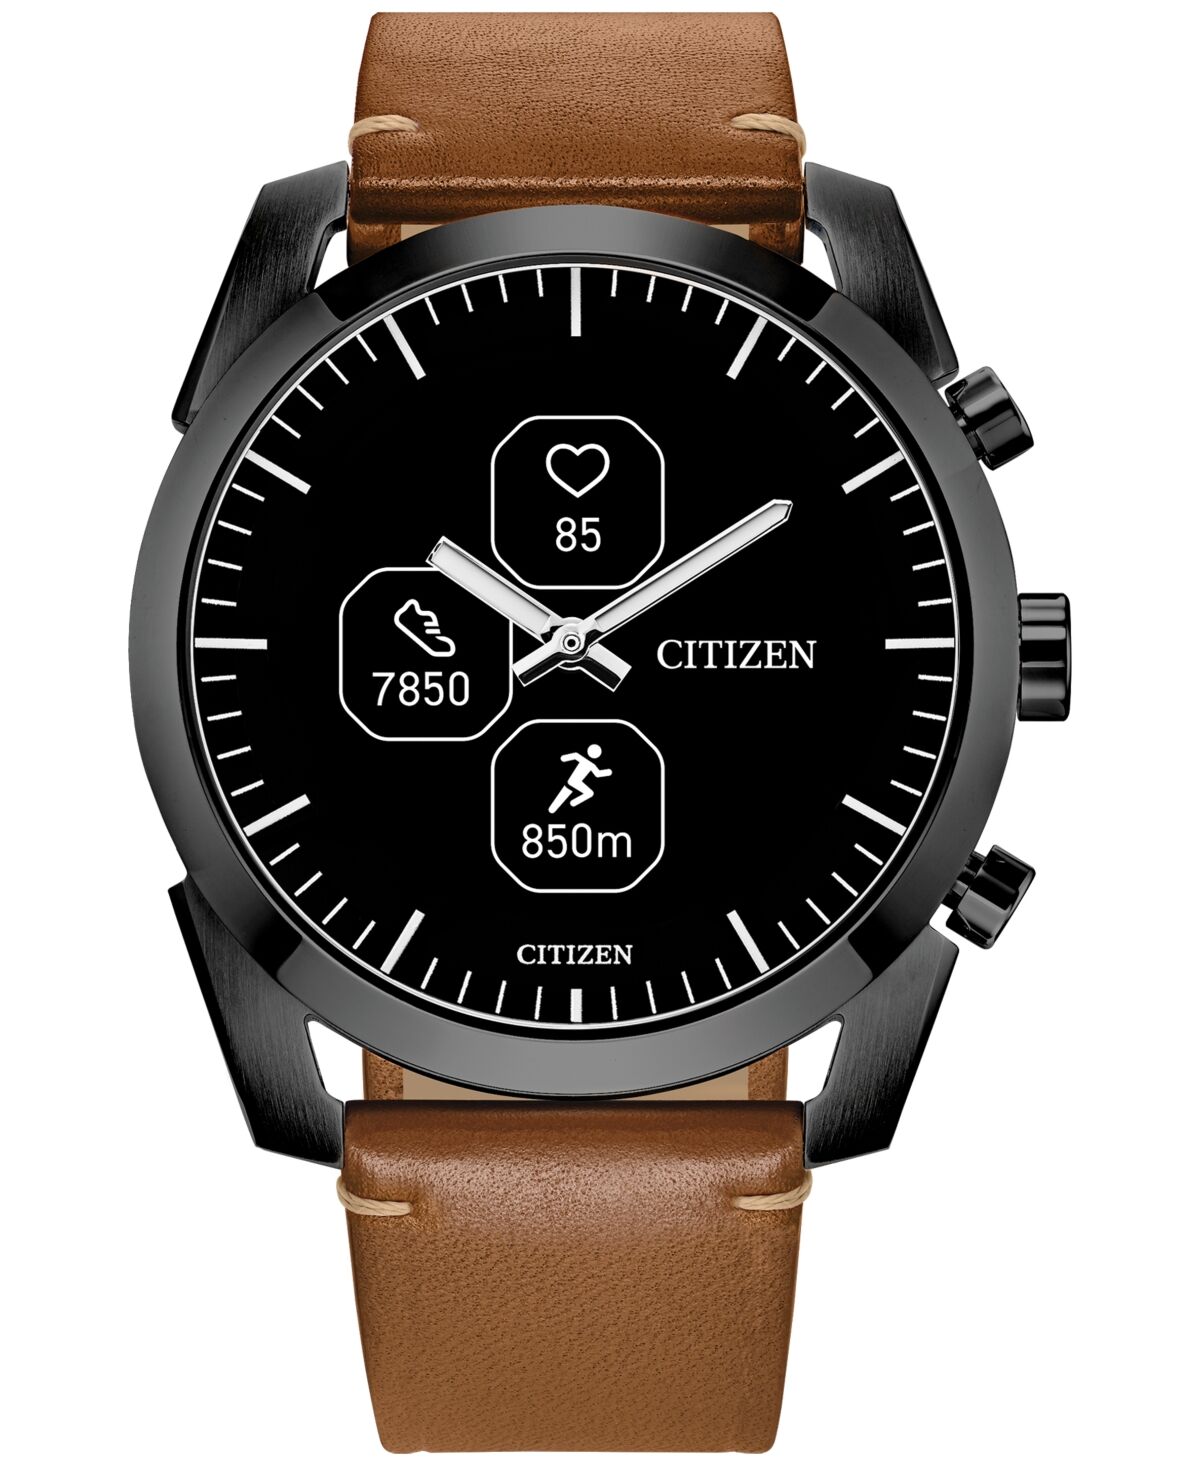 Citizen Men's Cz Smart Hybrid Sport Brown Leather Strap Smart Watch 43mm - Brown